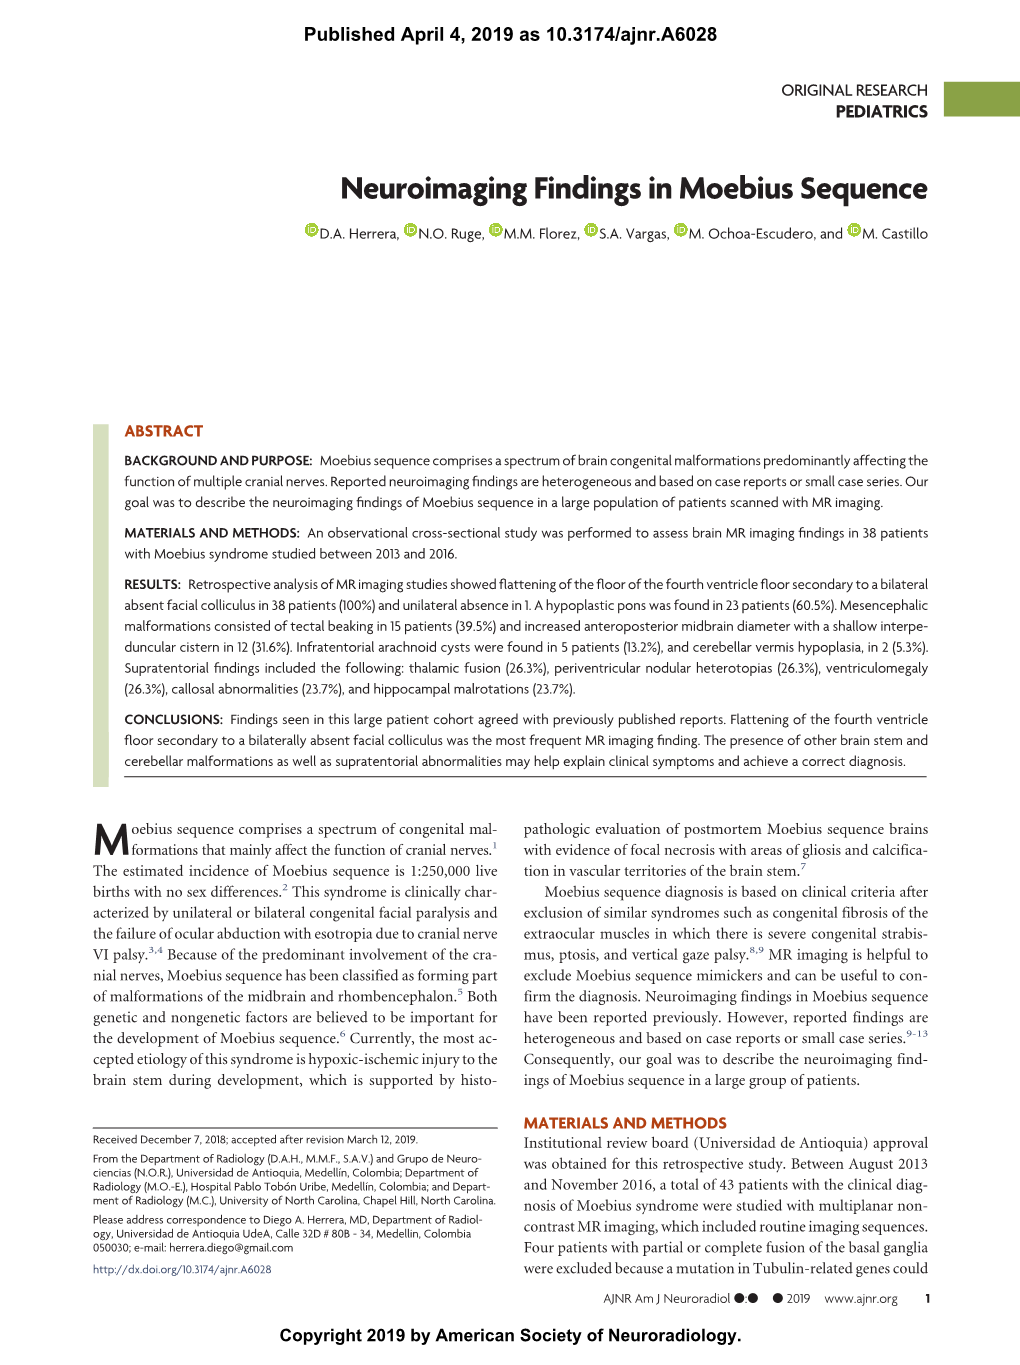 Neuroimaging Findings in Moebius Sequence